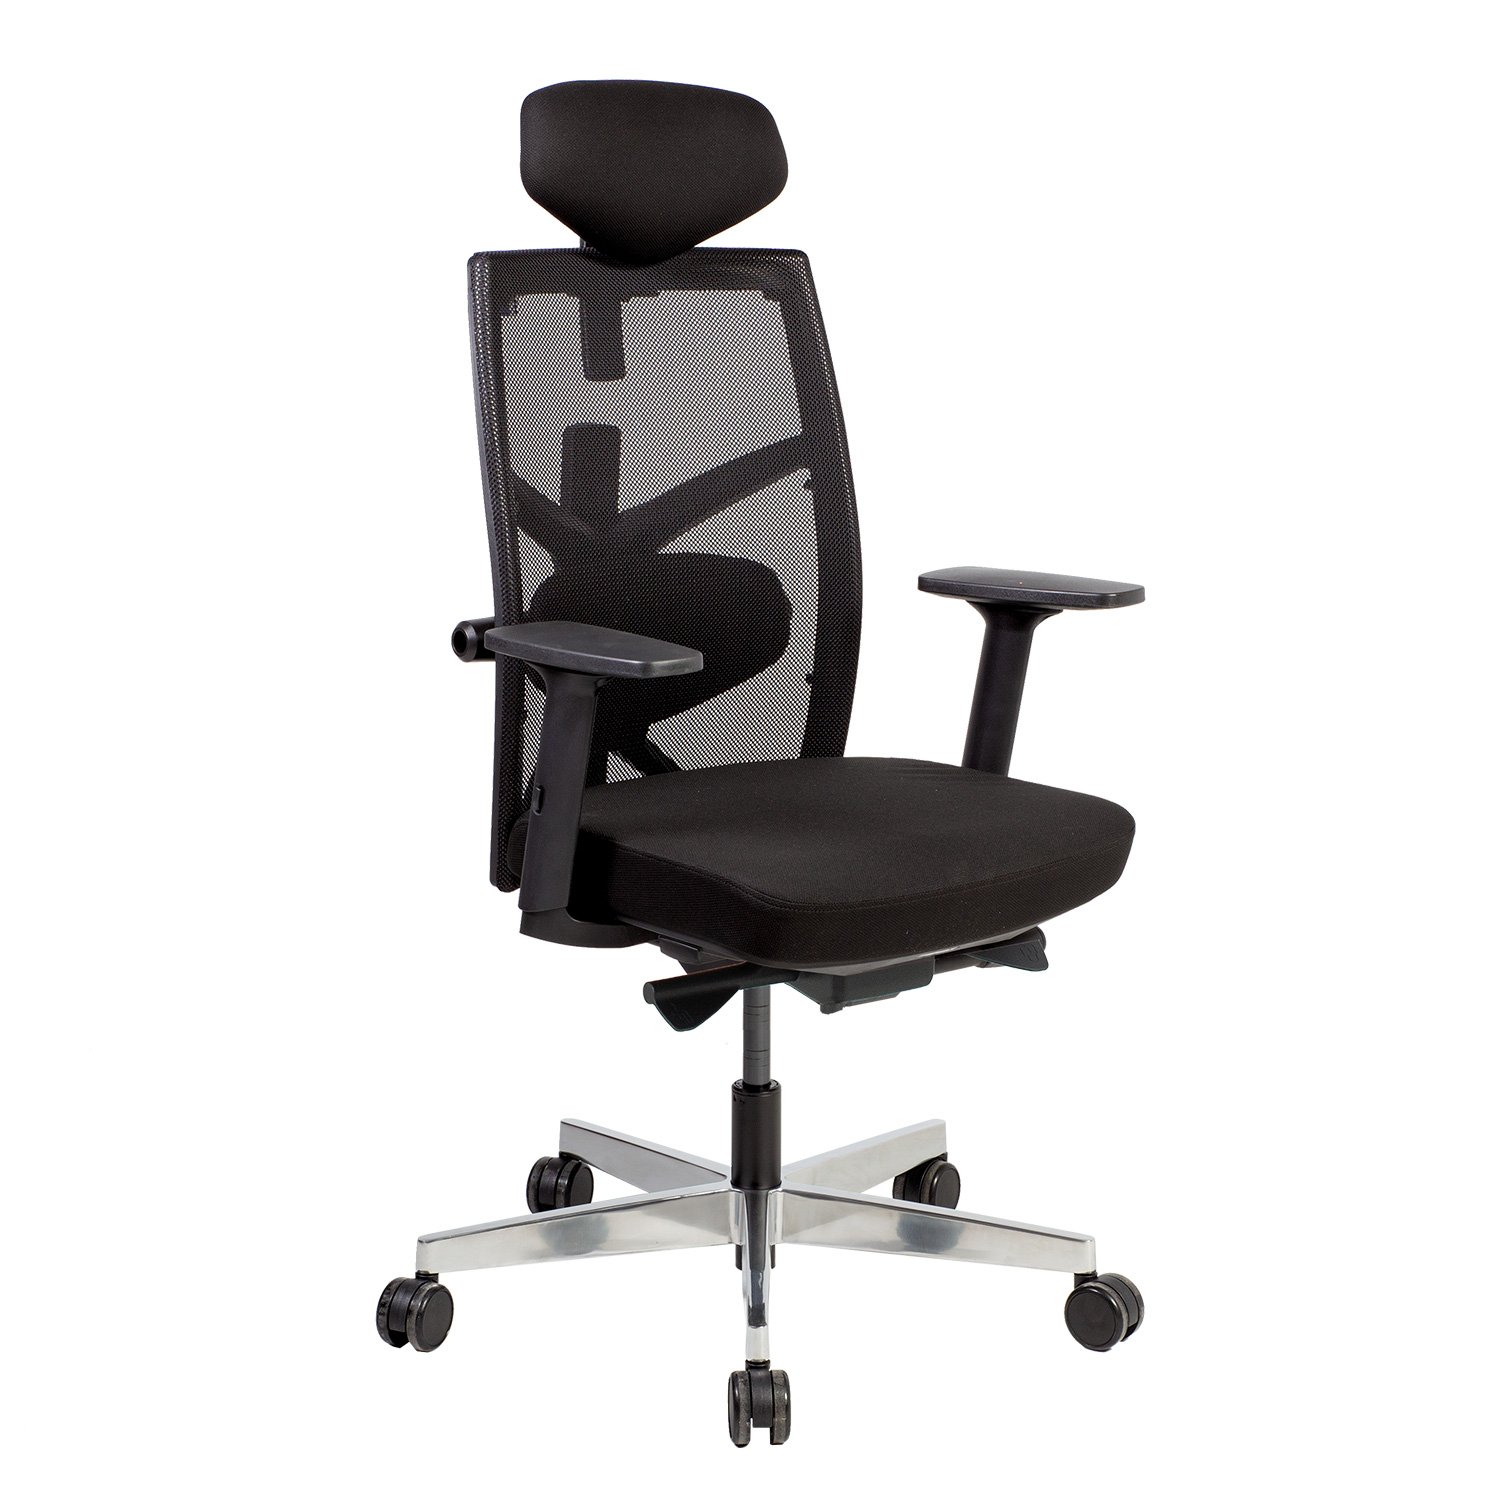 Biuro kėdė TUNE 70x70x111-128 cm, juoda